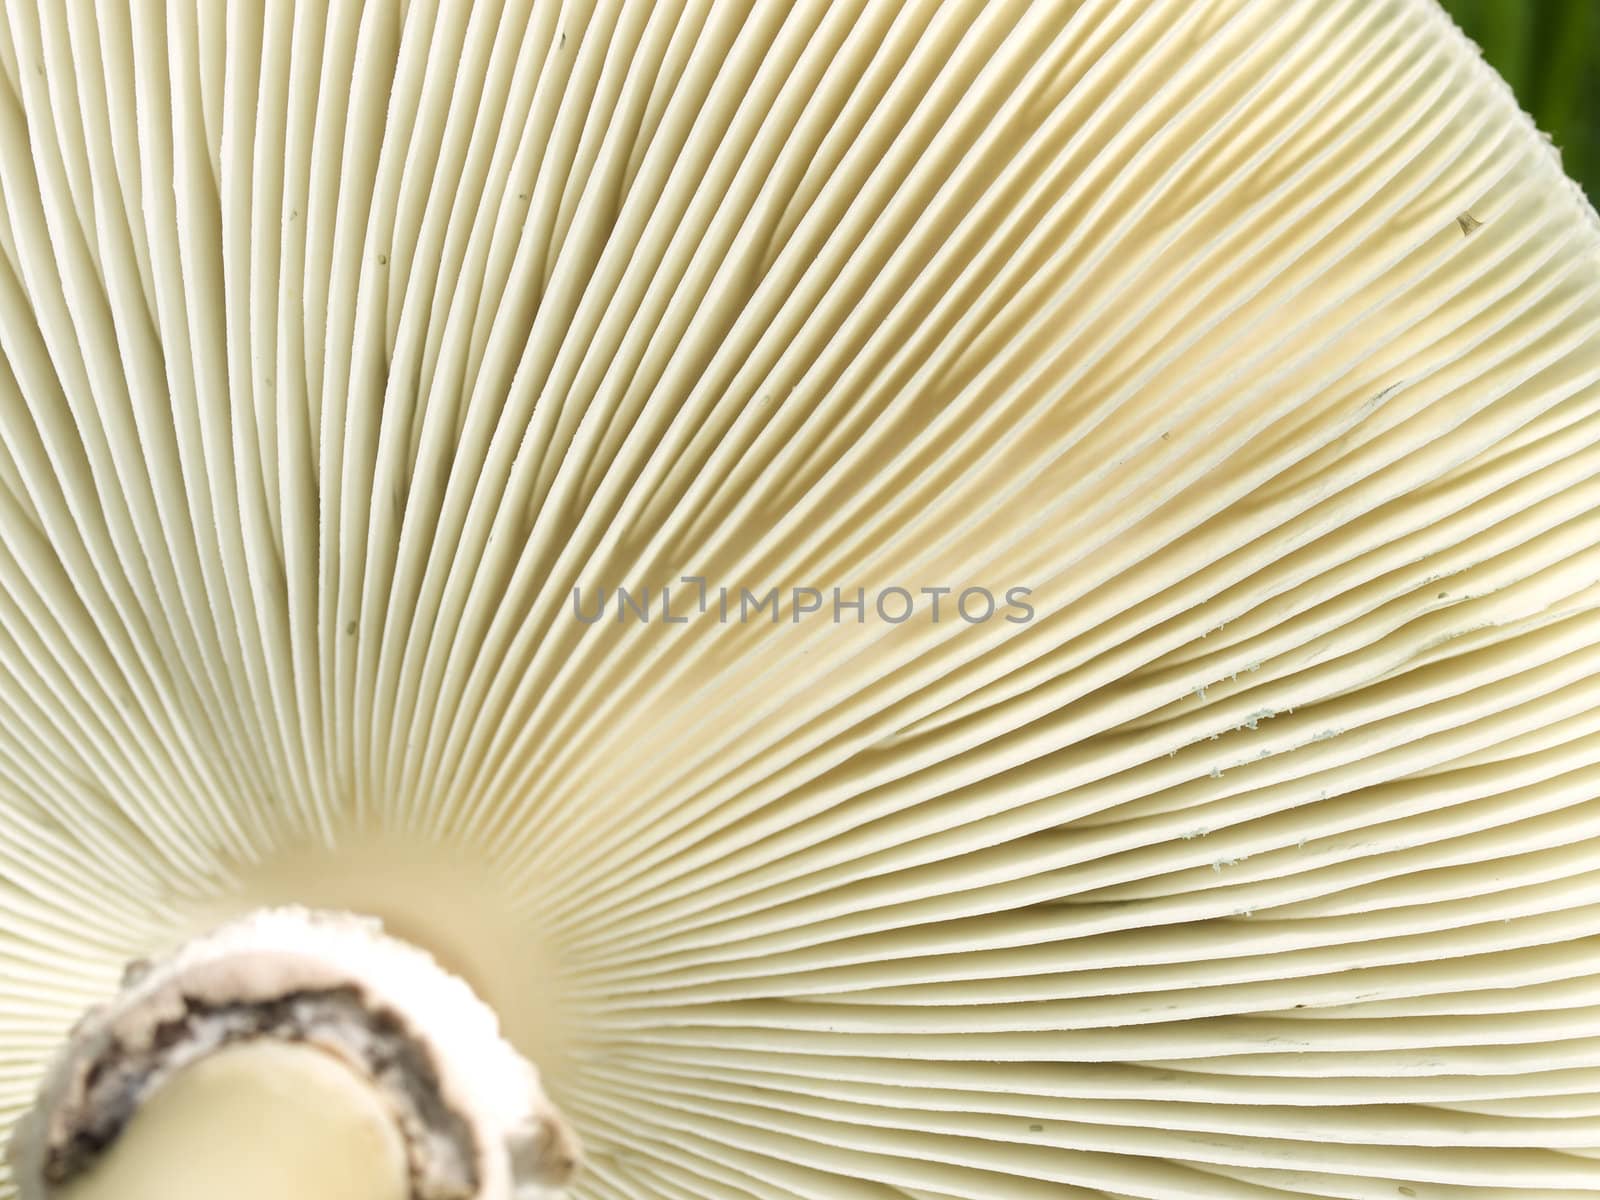 underside gills of mushroom fungi texture by sherj